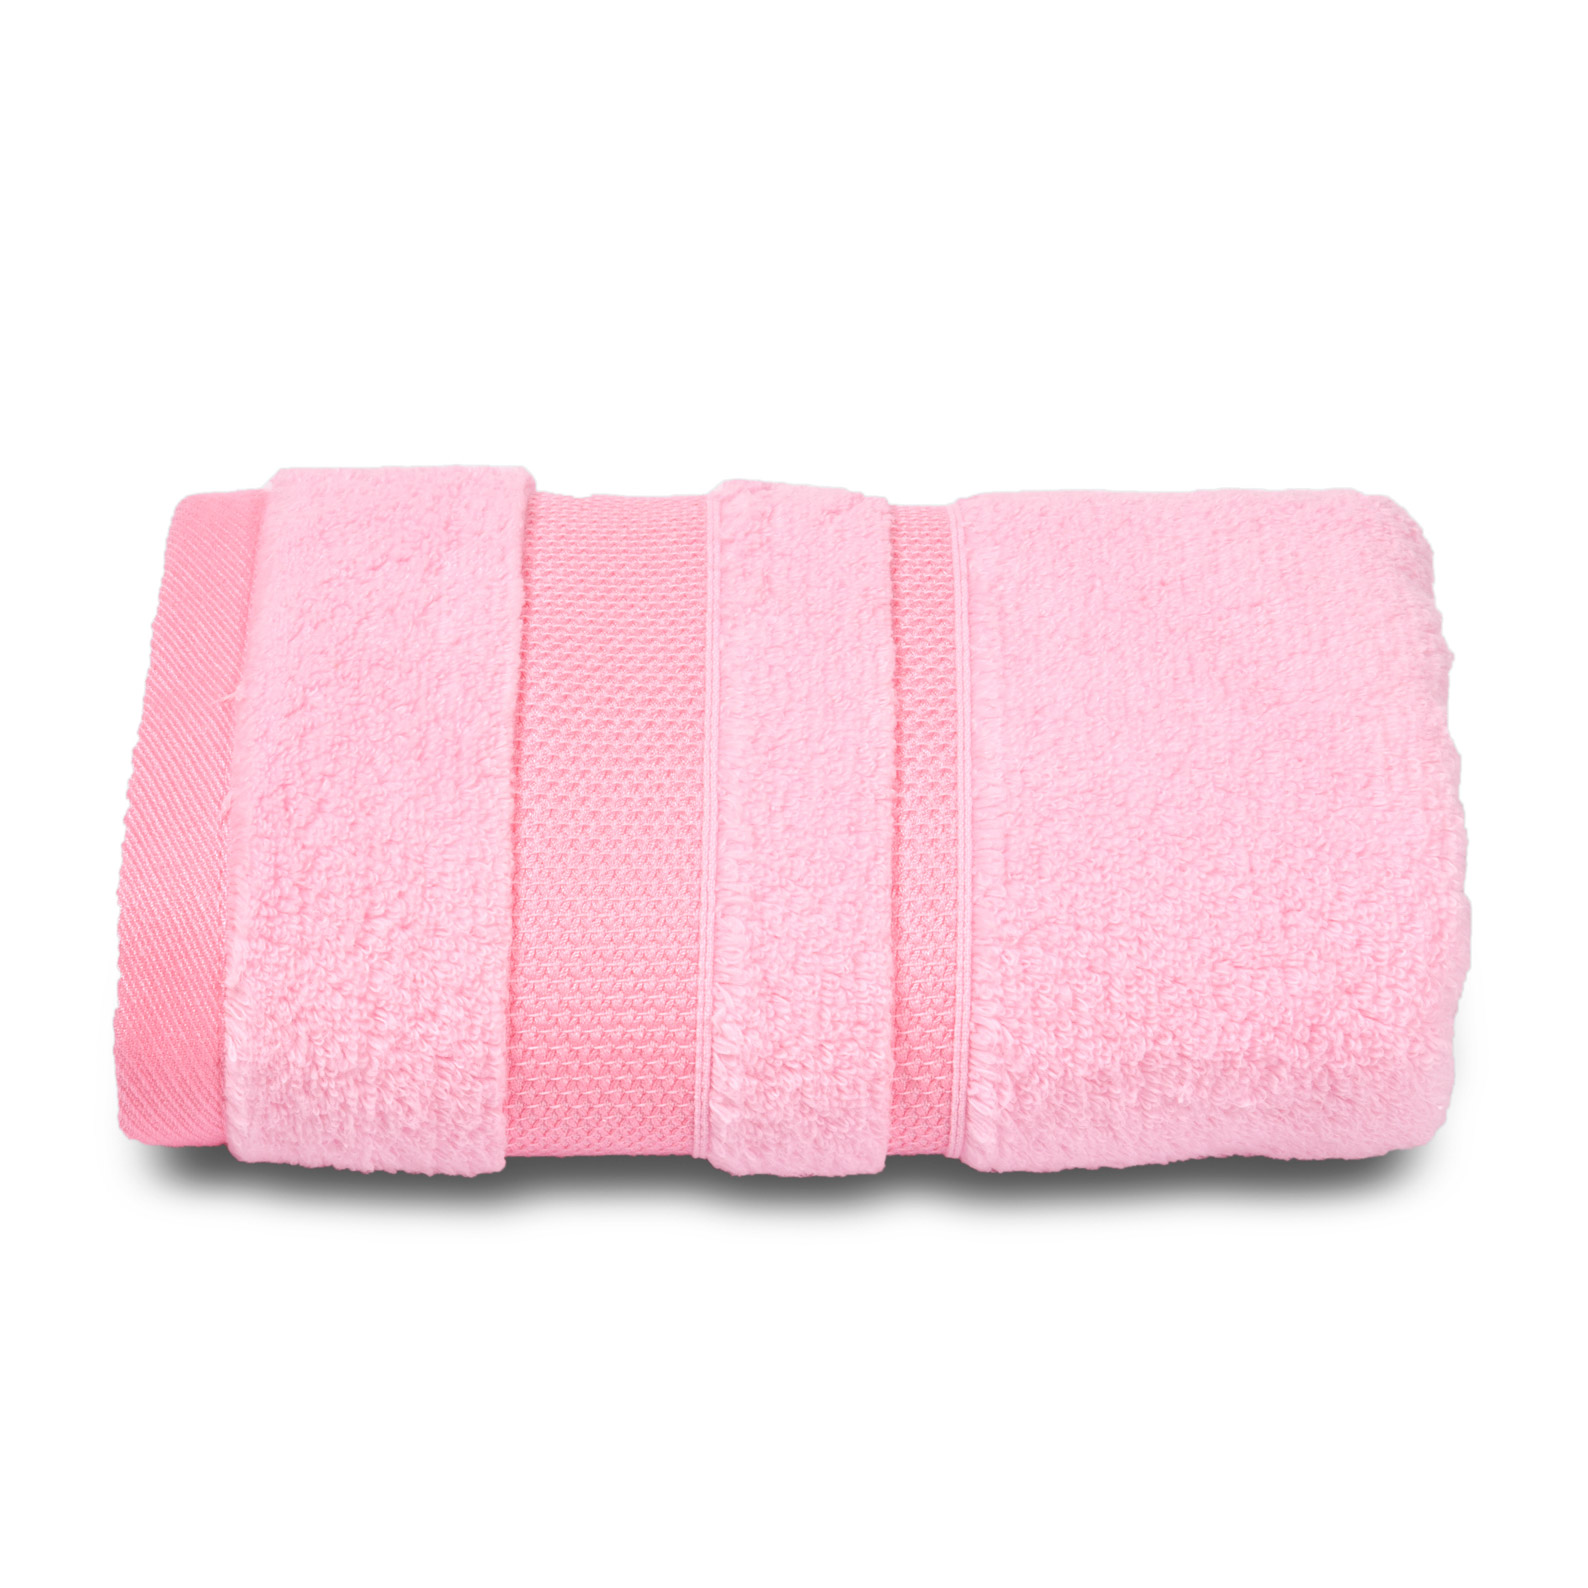 Полотенце махровое Cleanelly perfetto твист 50х100 розовый полотенце махровое гладкокрашенное cleanelly biscottom 30х50 розовый